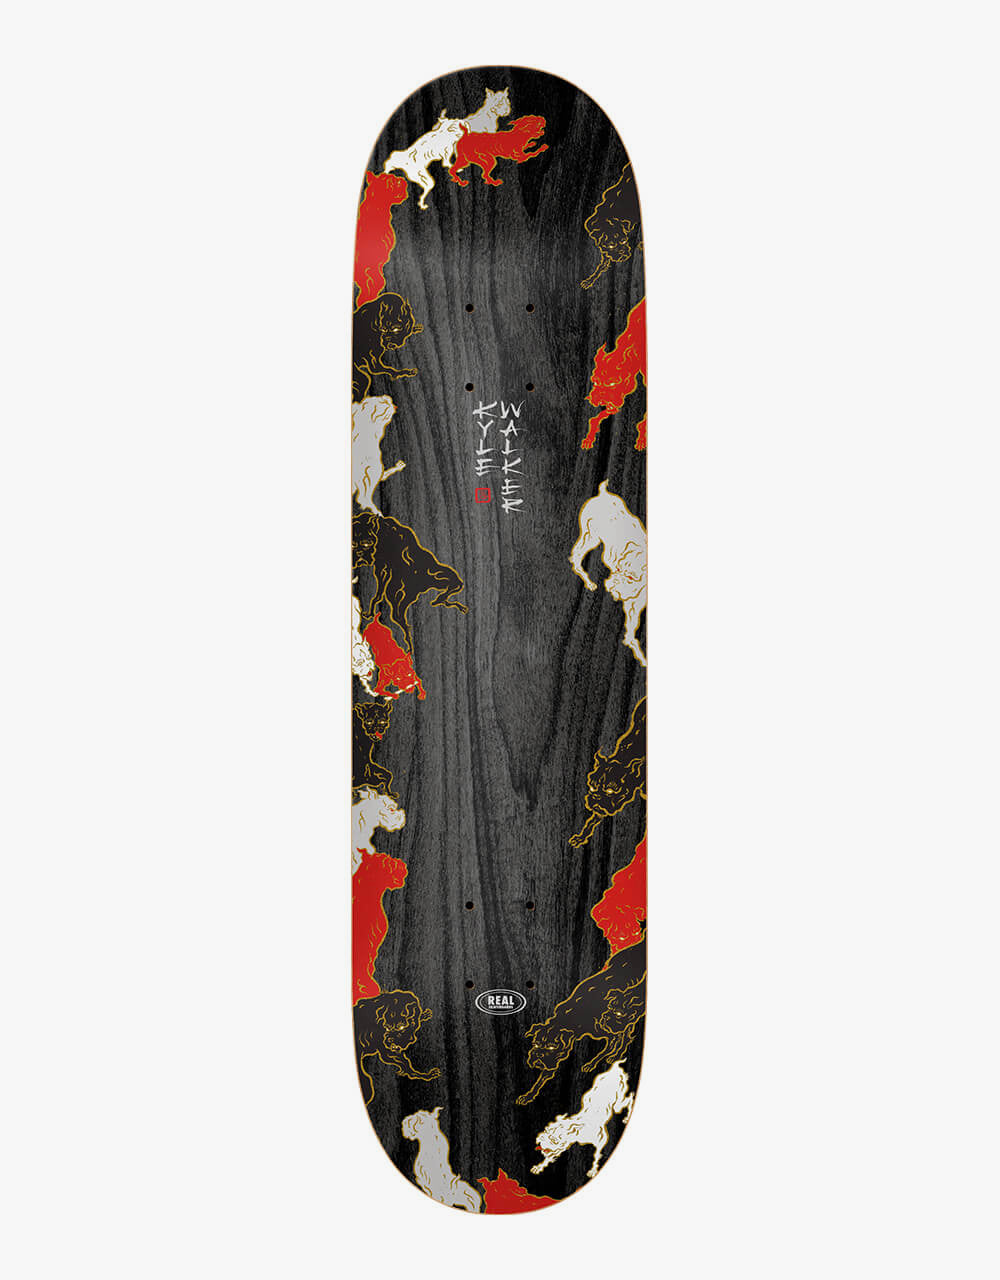 Real Kyle Rats Skateboard Deck - 8.125"